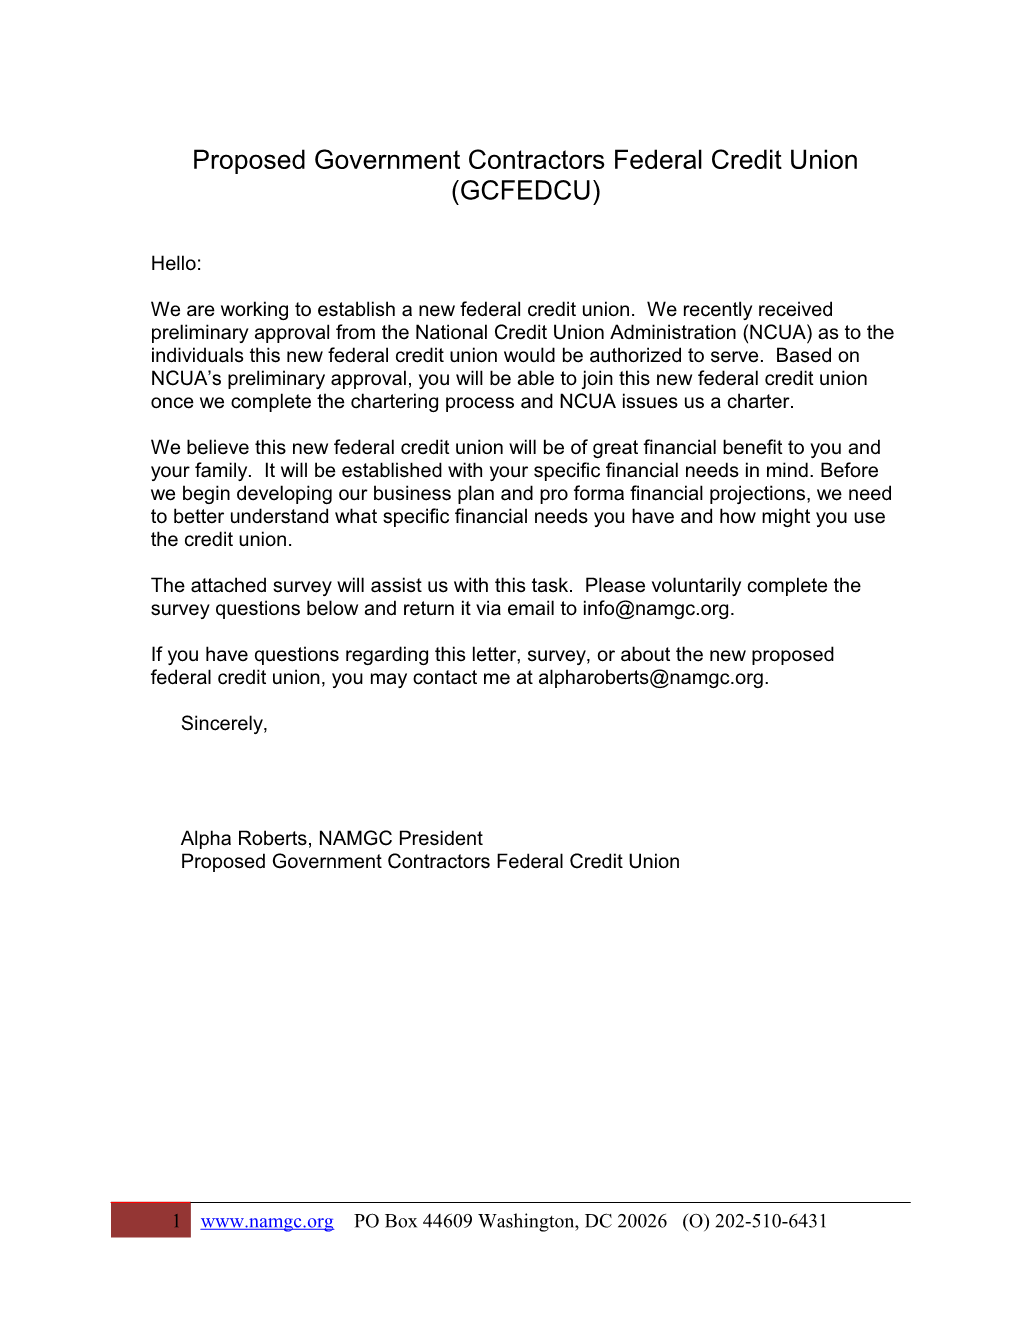 Proposed Government Contractors Federal Credit Union (GCFEDCU)